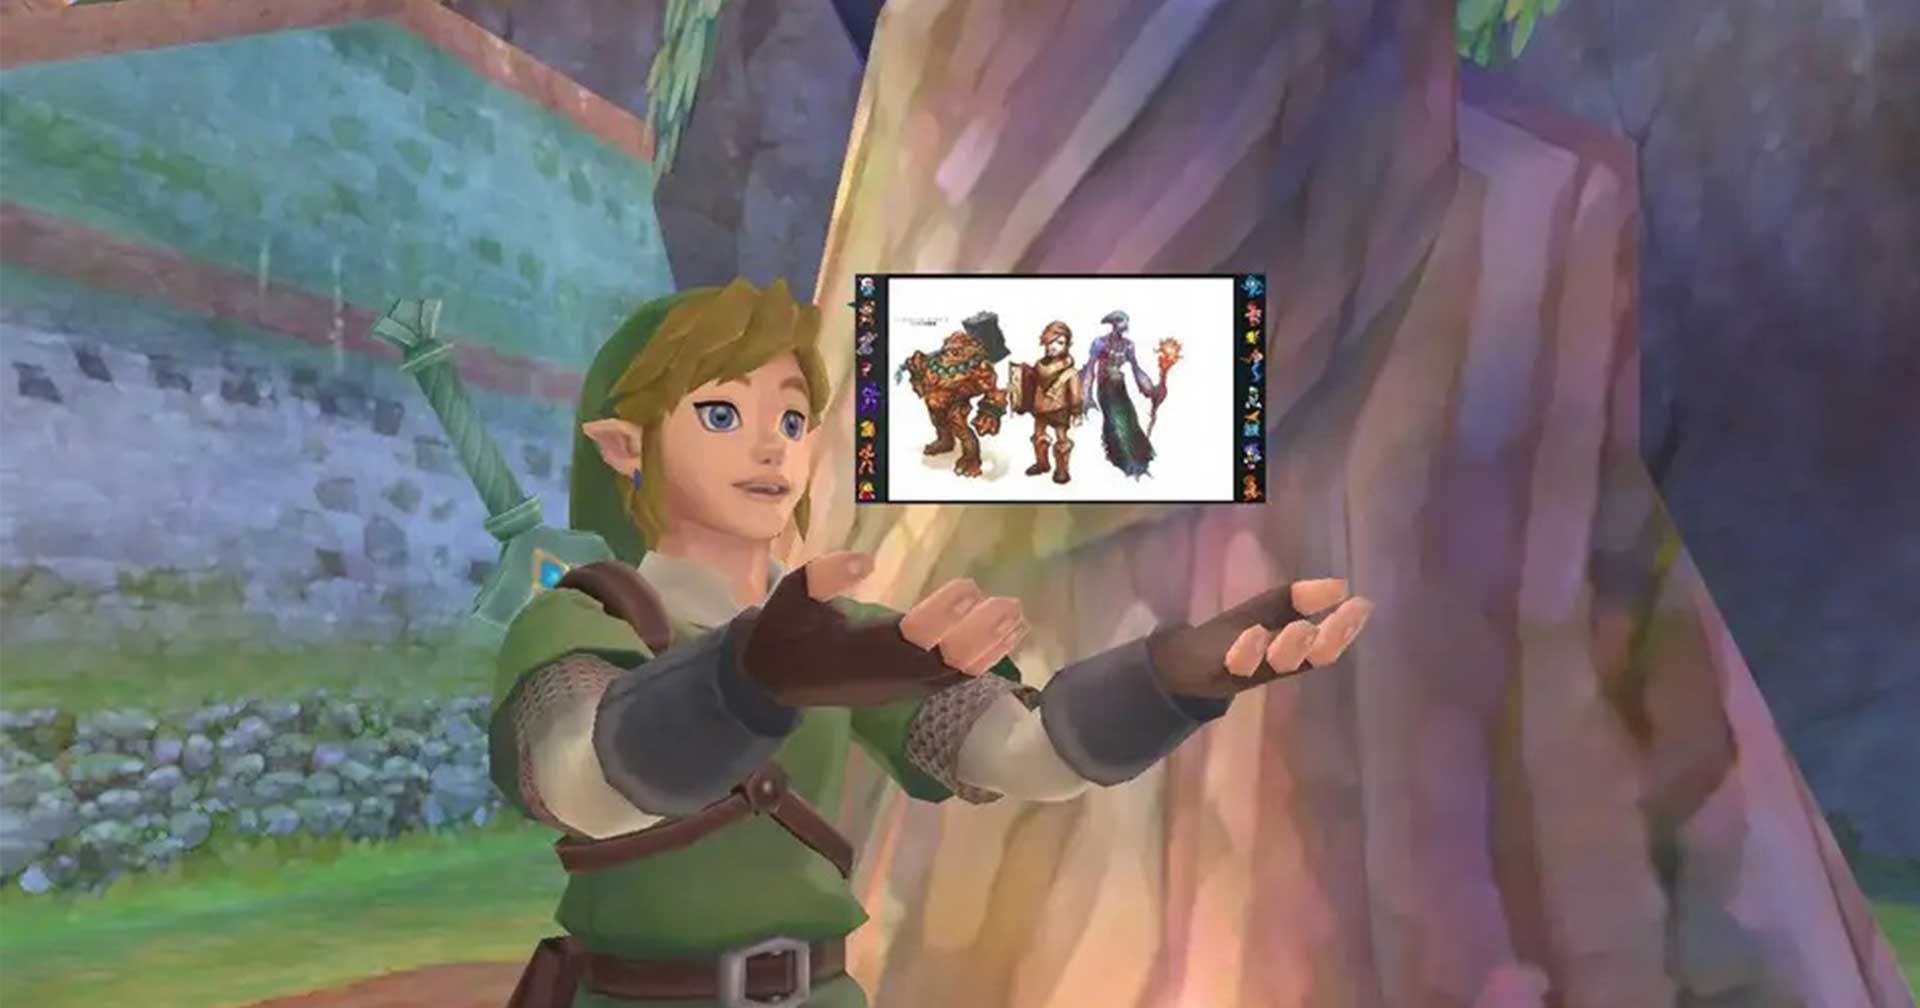 Youtube กู้วิดีโอเล่าประวัติเกม Zelda Tactics กลับ หลังถูก Nintendo สั่งระงับ